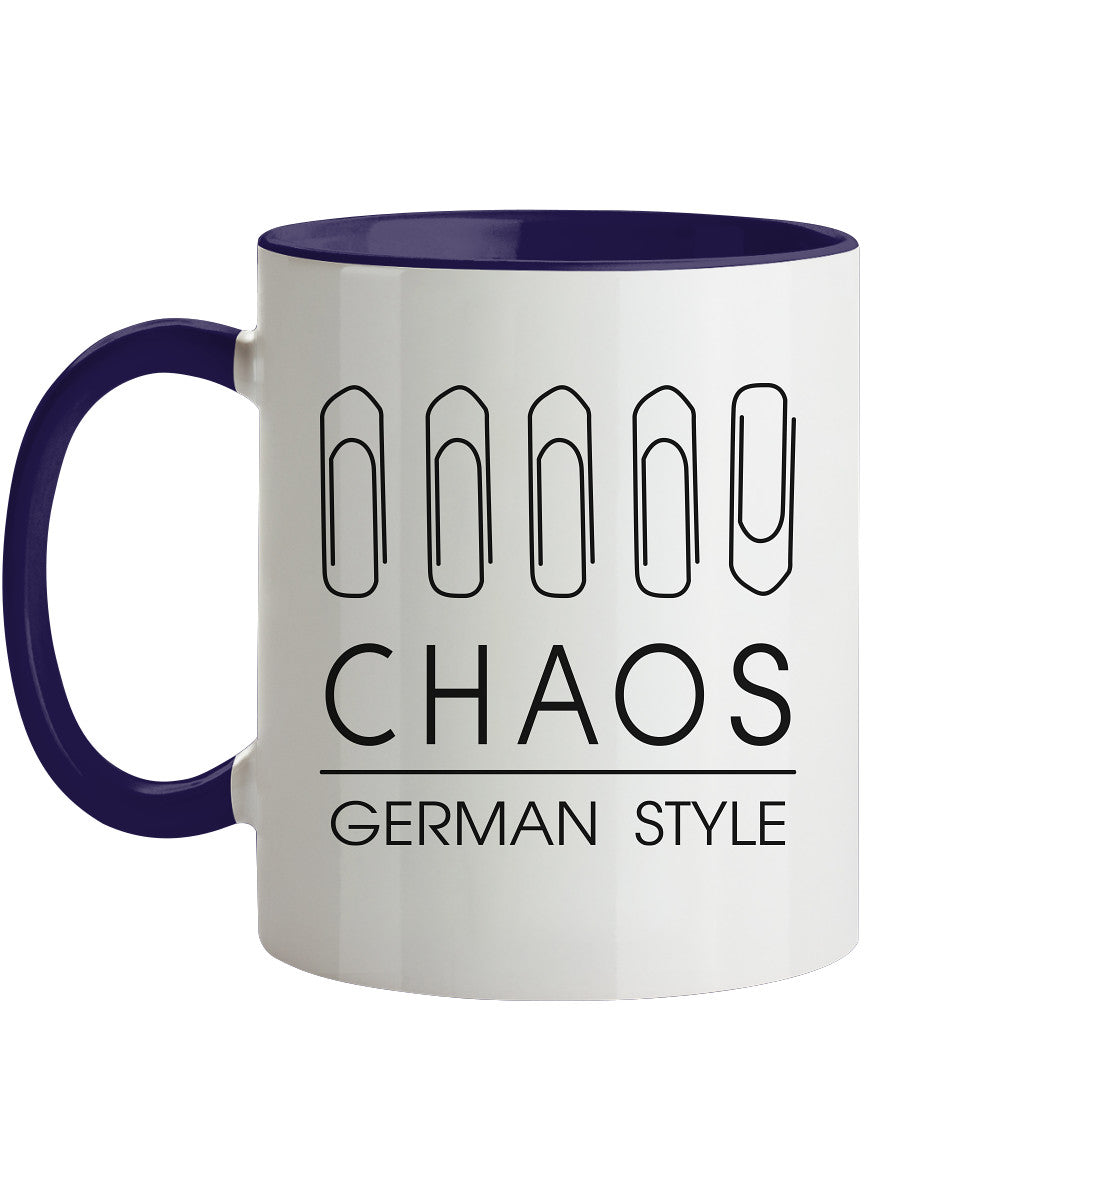 Chaos German Style - Tasse zweifarbig